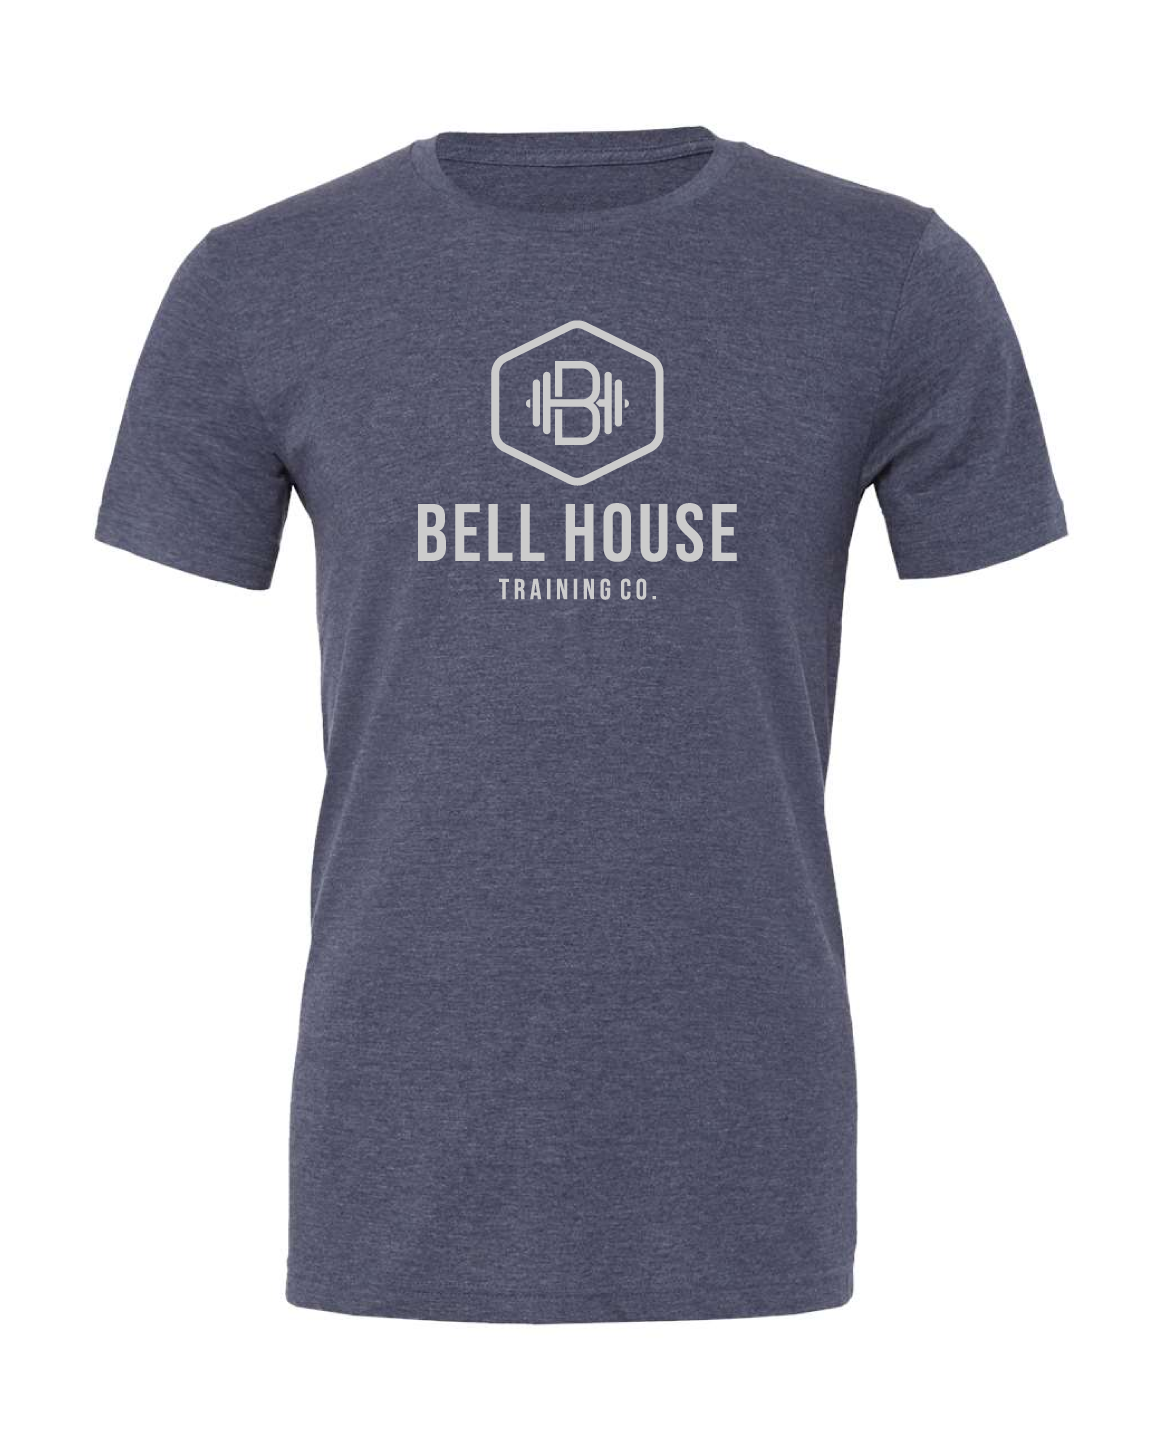 Bell House - Unisex Premium T-Shirt